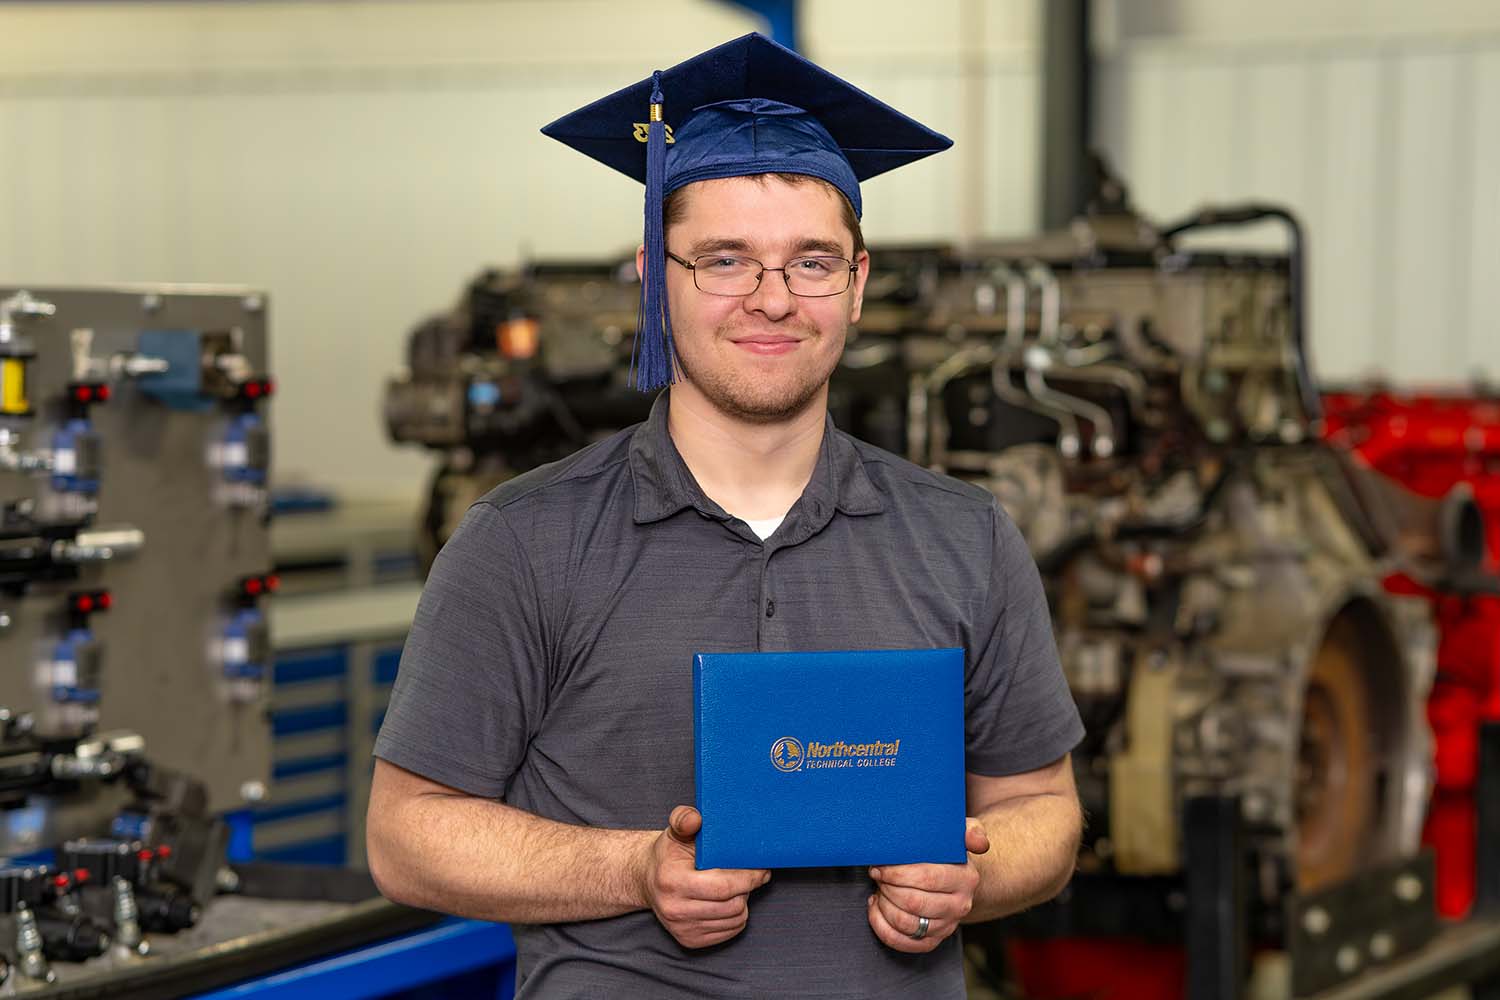 Jonathan posing while wearing an NTC graduation cap and holding his diploma.